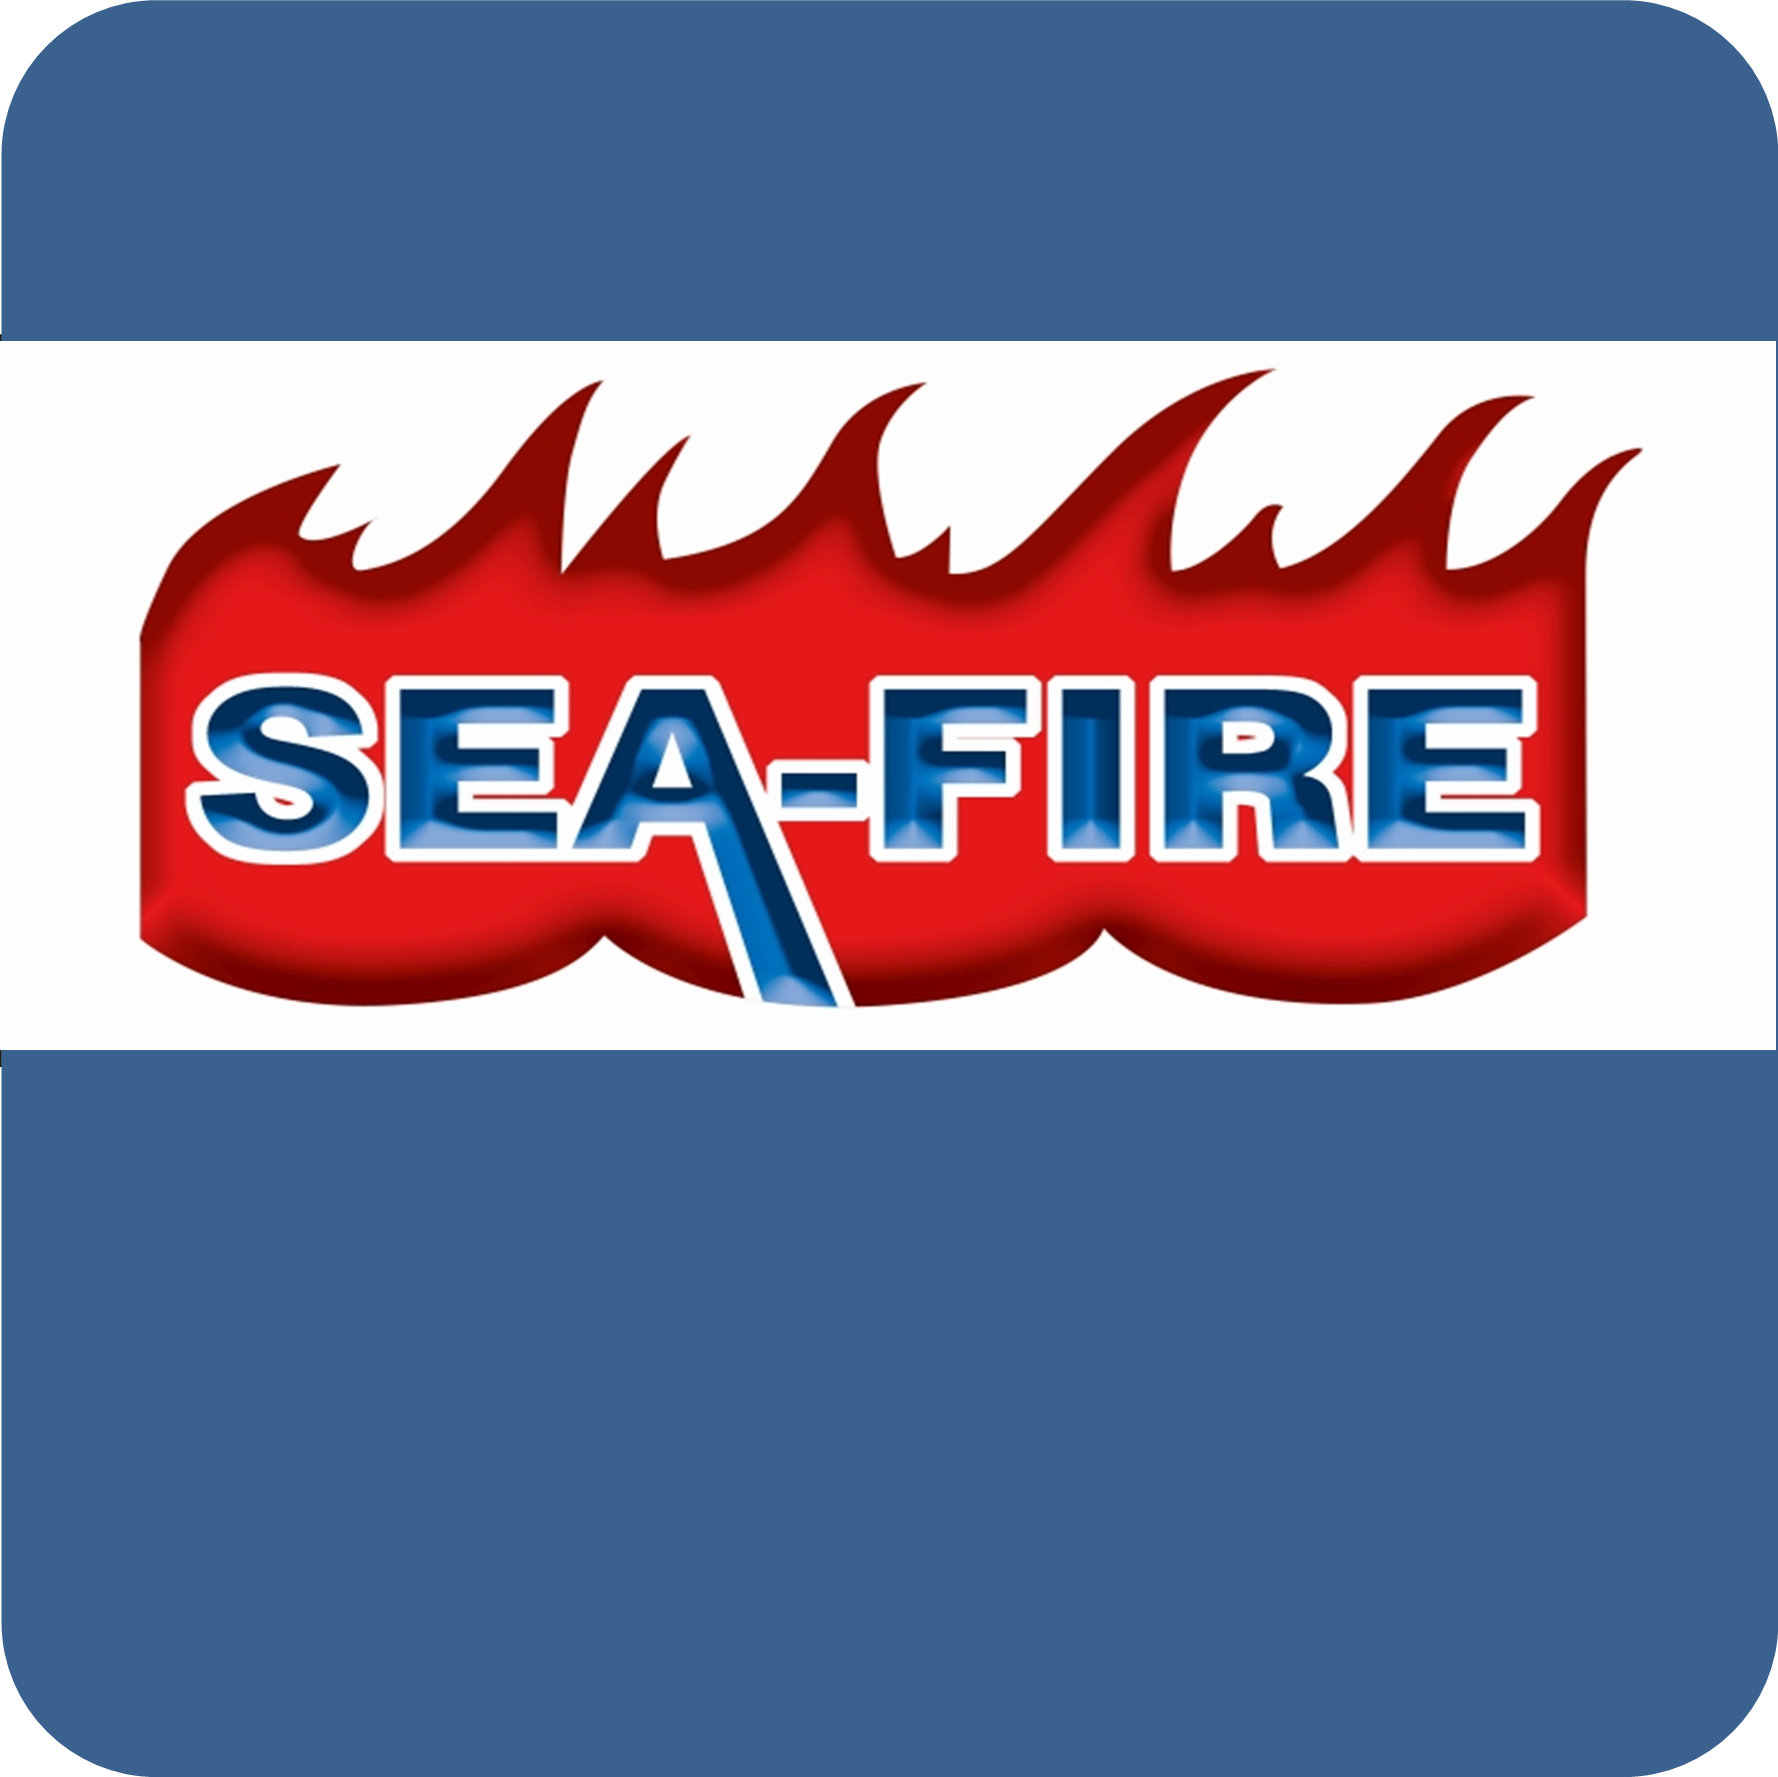 Sea Fire Feuerloeschsysteme